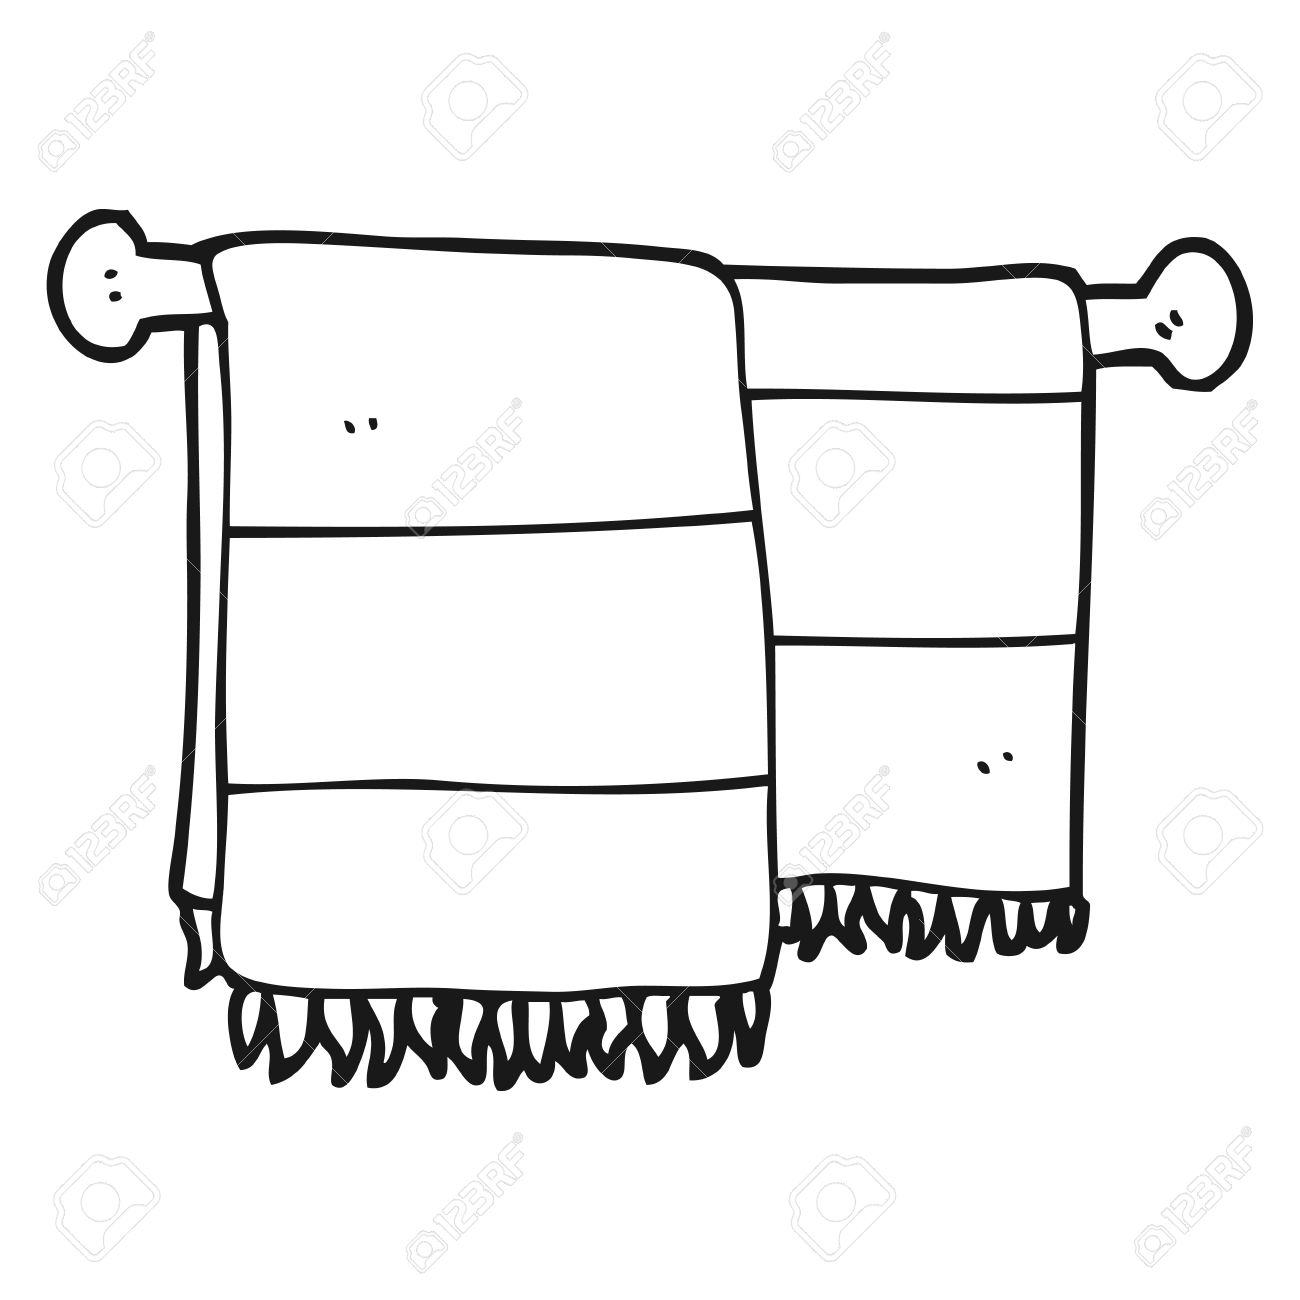 Towel clipart cute.